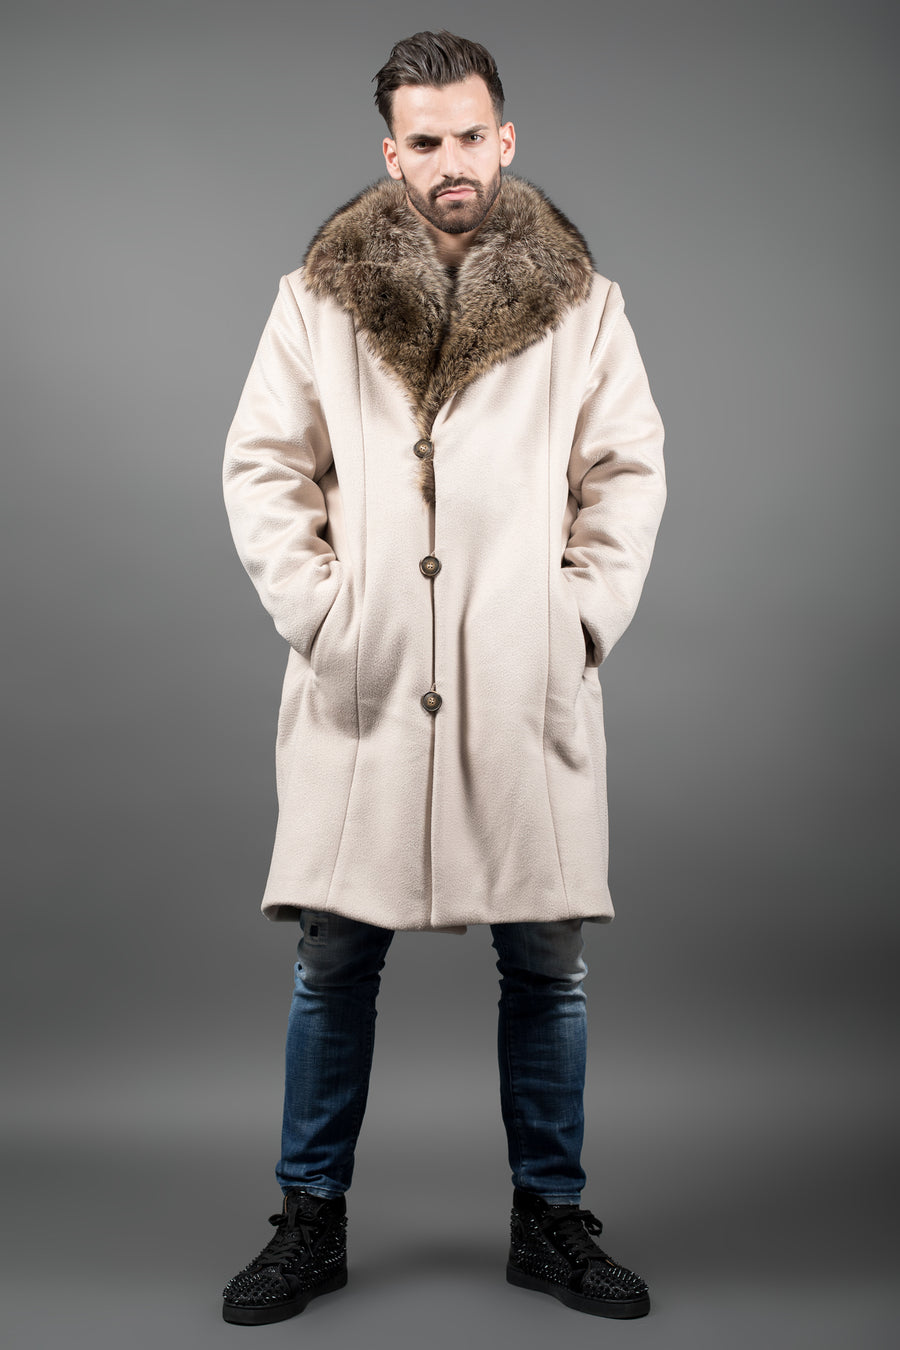 Men's Fur Coat Fashion Sheepskin Jacket Men Raccoon Fur Collar